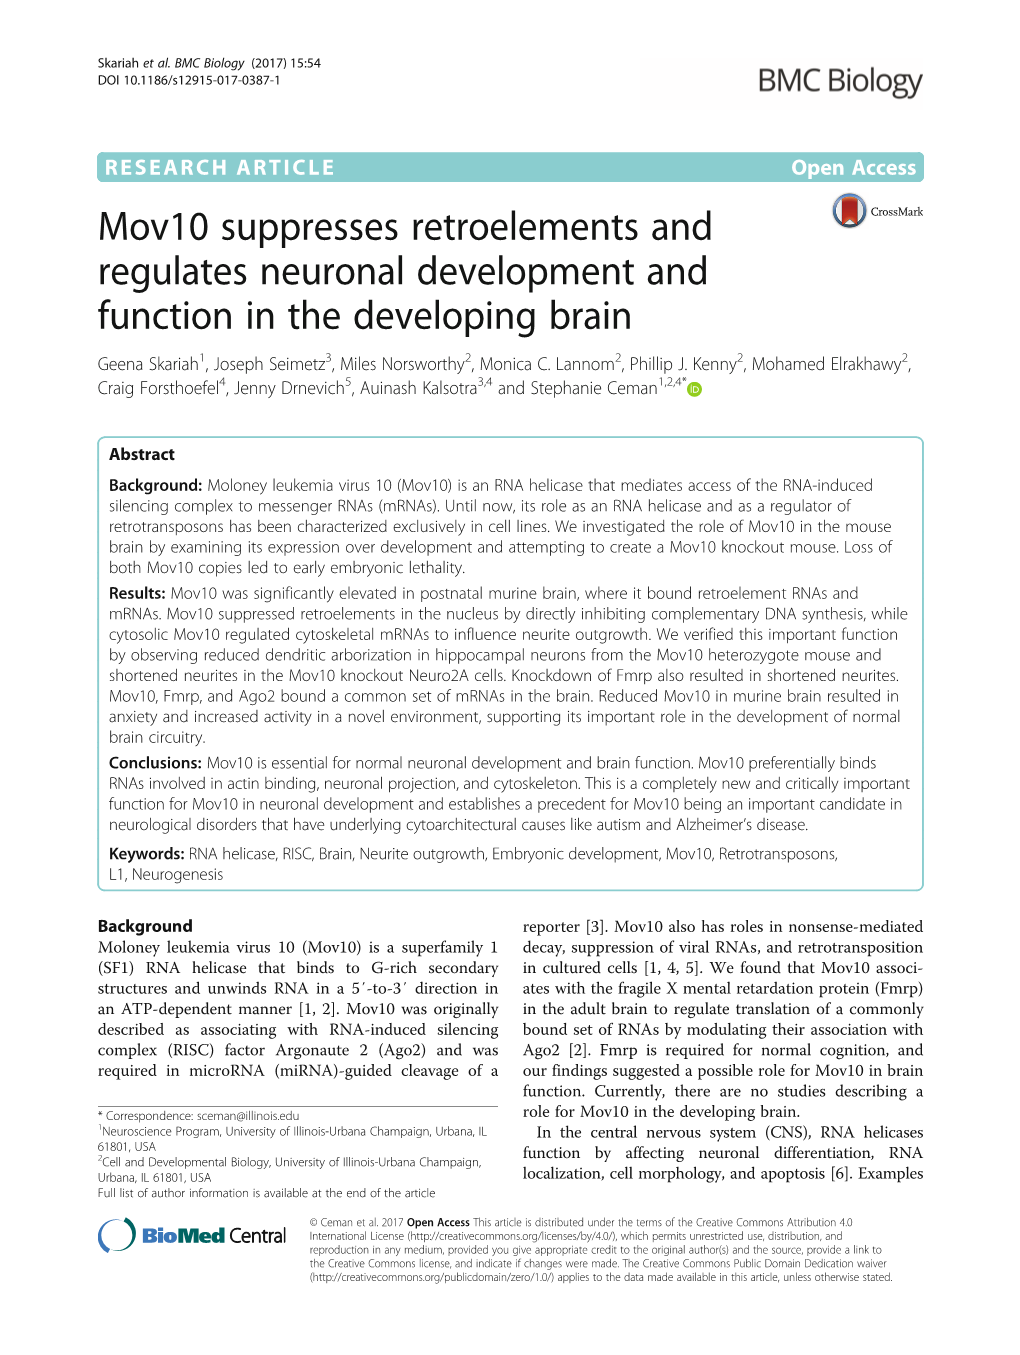 Mov10 Suppresses Retroelements and Regulates Neuronal Development and Function in the Developing Brain Geena Skariah1, Joseph Seimetz3, Miles Norsworthy2, Monica C